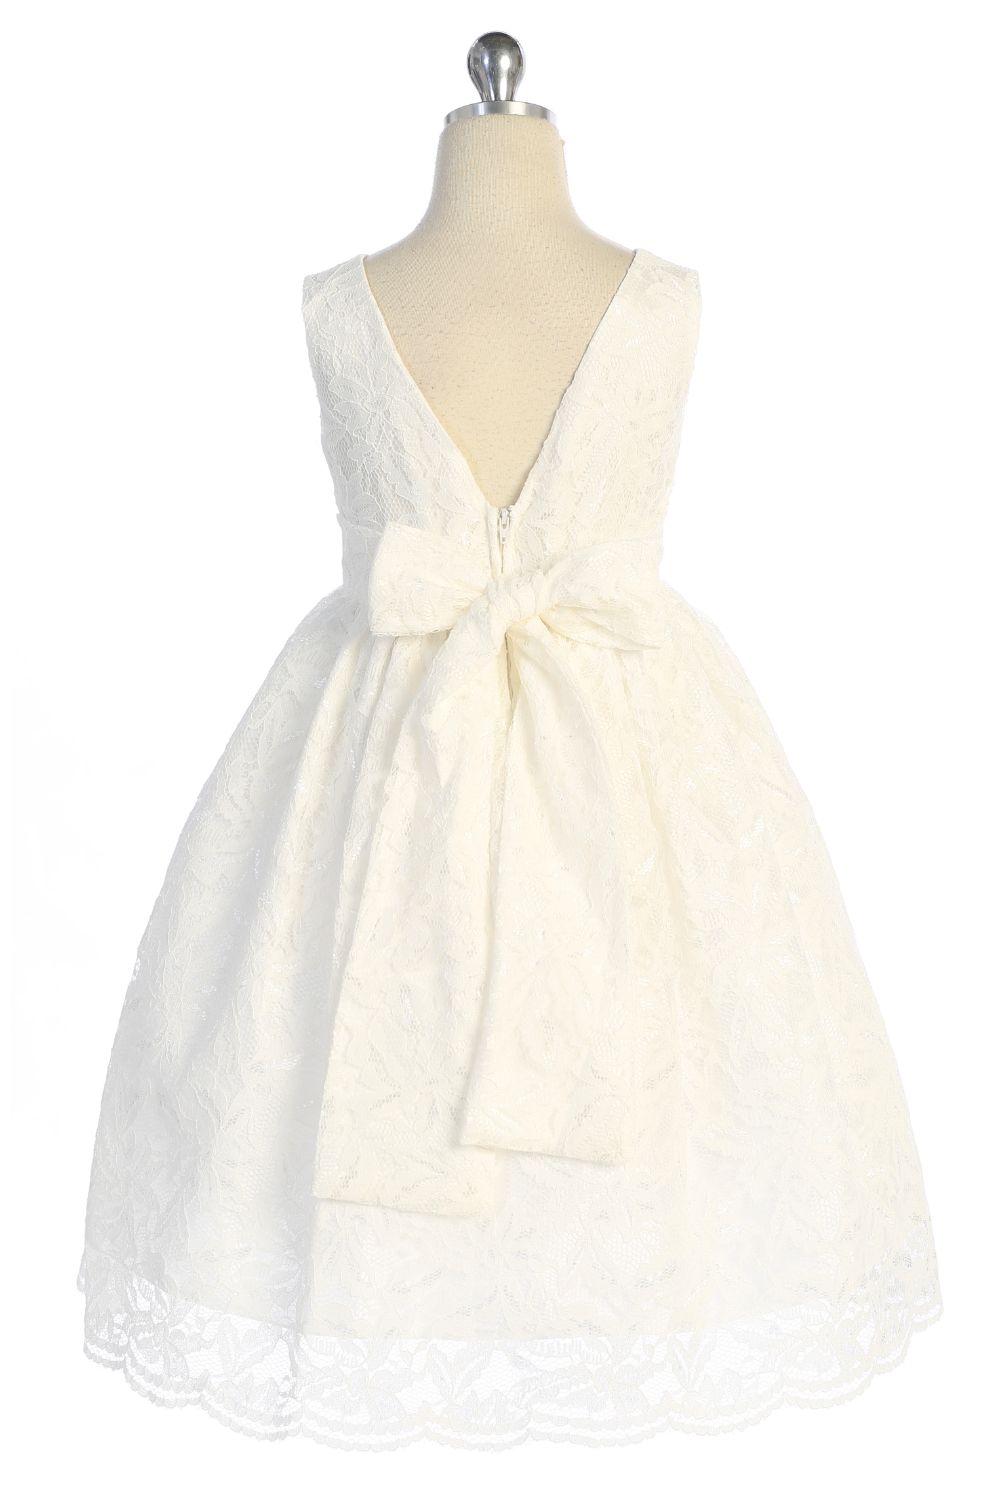 526-D- Lace V Back Bow Dress w/ Diamond Shape Rhinestone Trim